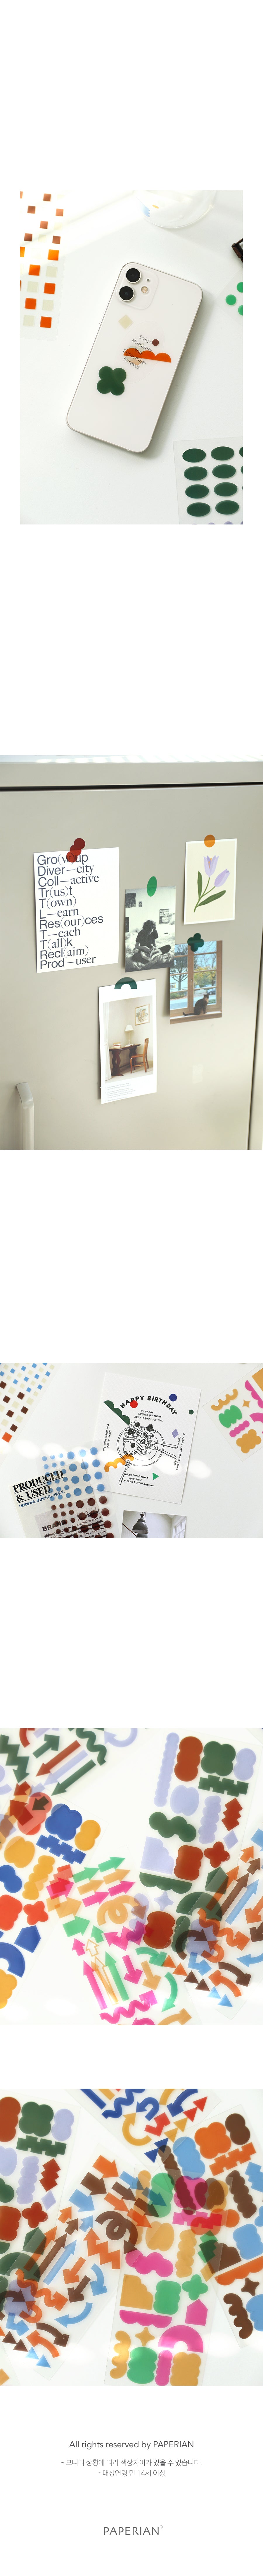 Pigment See-Thru Sticker 7 Designs Set 28 Sheets Paperian 11 Planner Stickers, Decorative Stickers Hunter & The Scholar